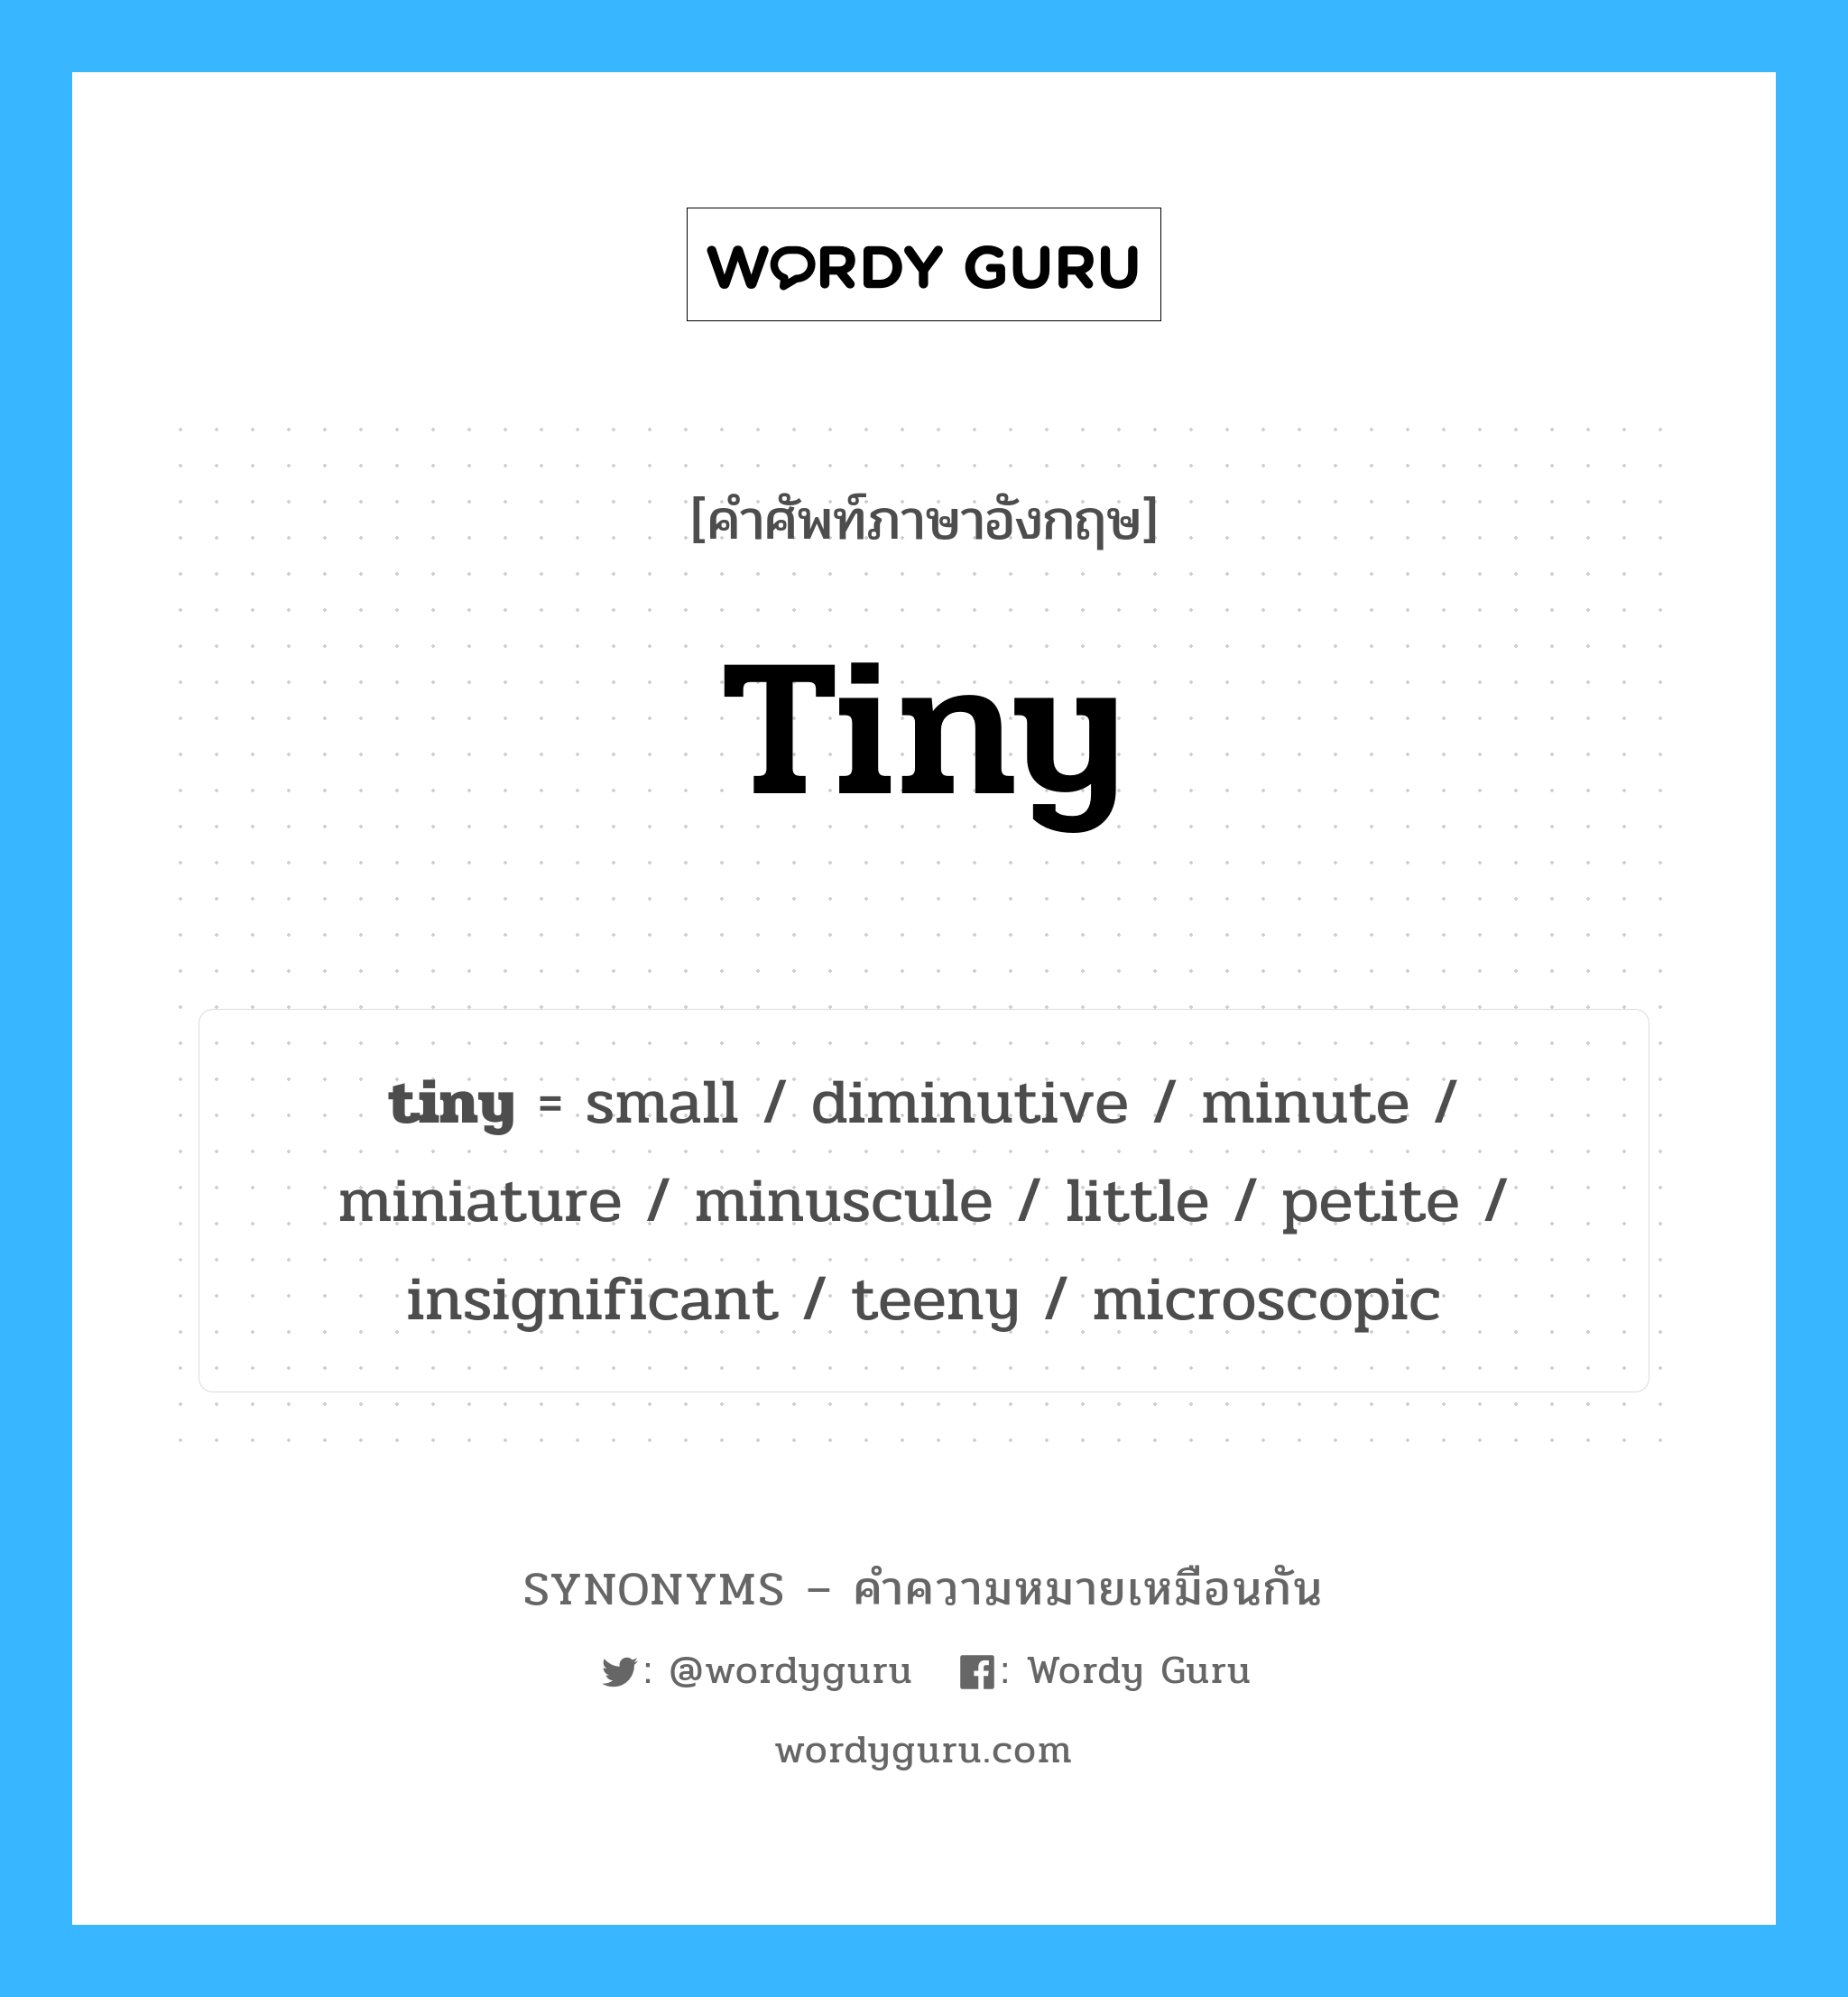 minuscule เป็นหนึ่งใน tiny และมีคำอื่น ๆ อีกดังนี้, คำศัพท์ภาษาอังกฤษ minuscule ความหมายคล้ายกันกับ tiny แปลว่า minuscule หมวด tiny